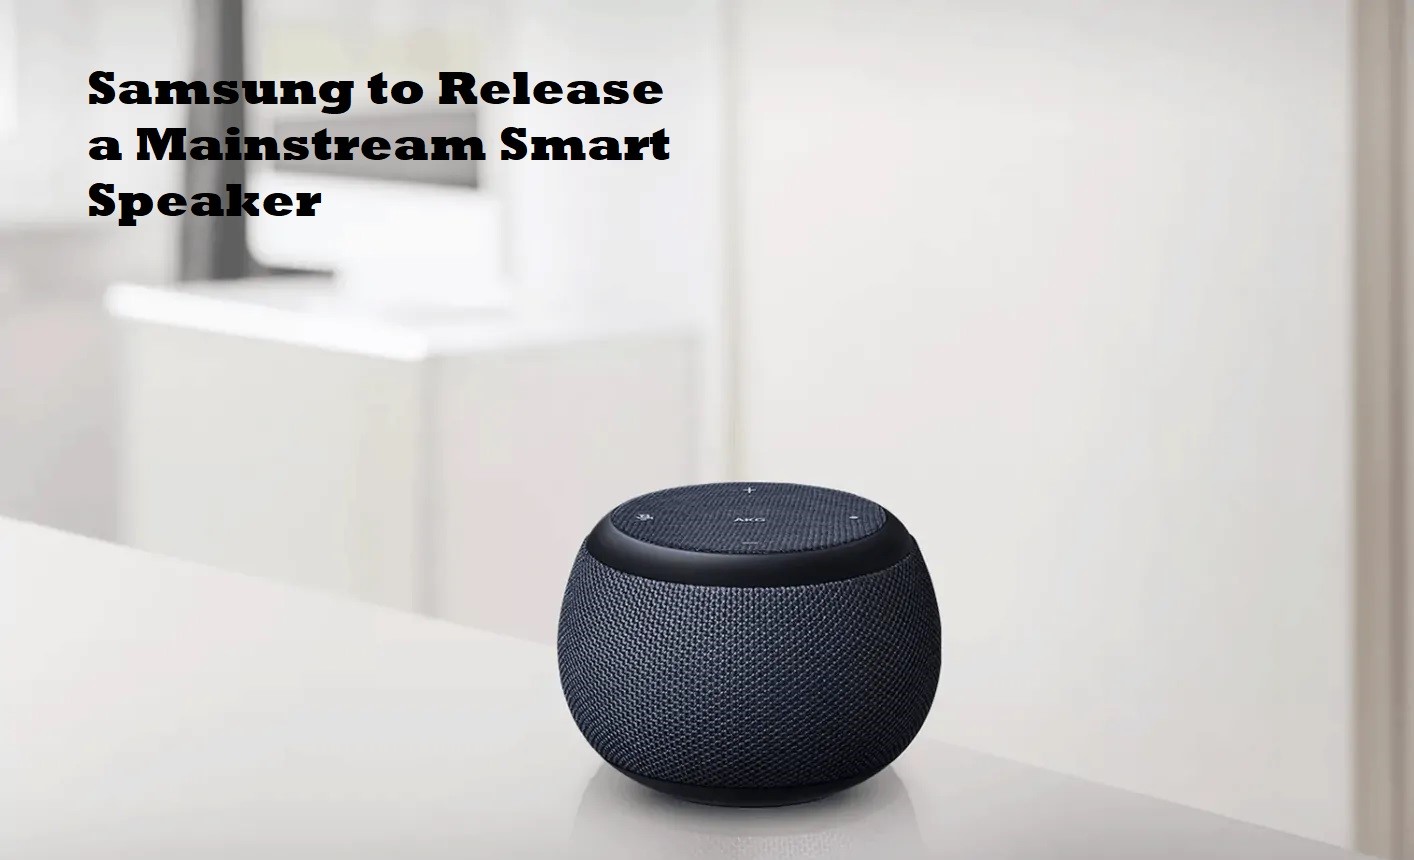 Samsung to Release a Mainstream Smart Speaker